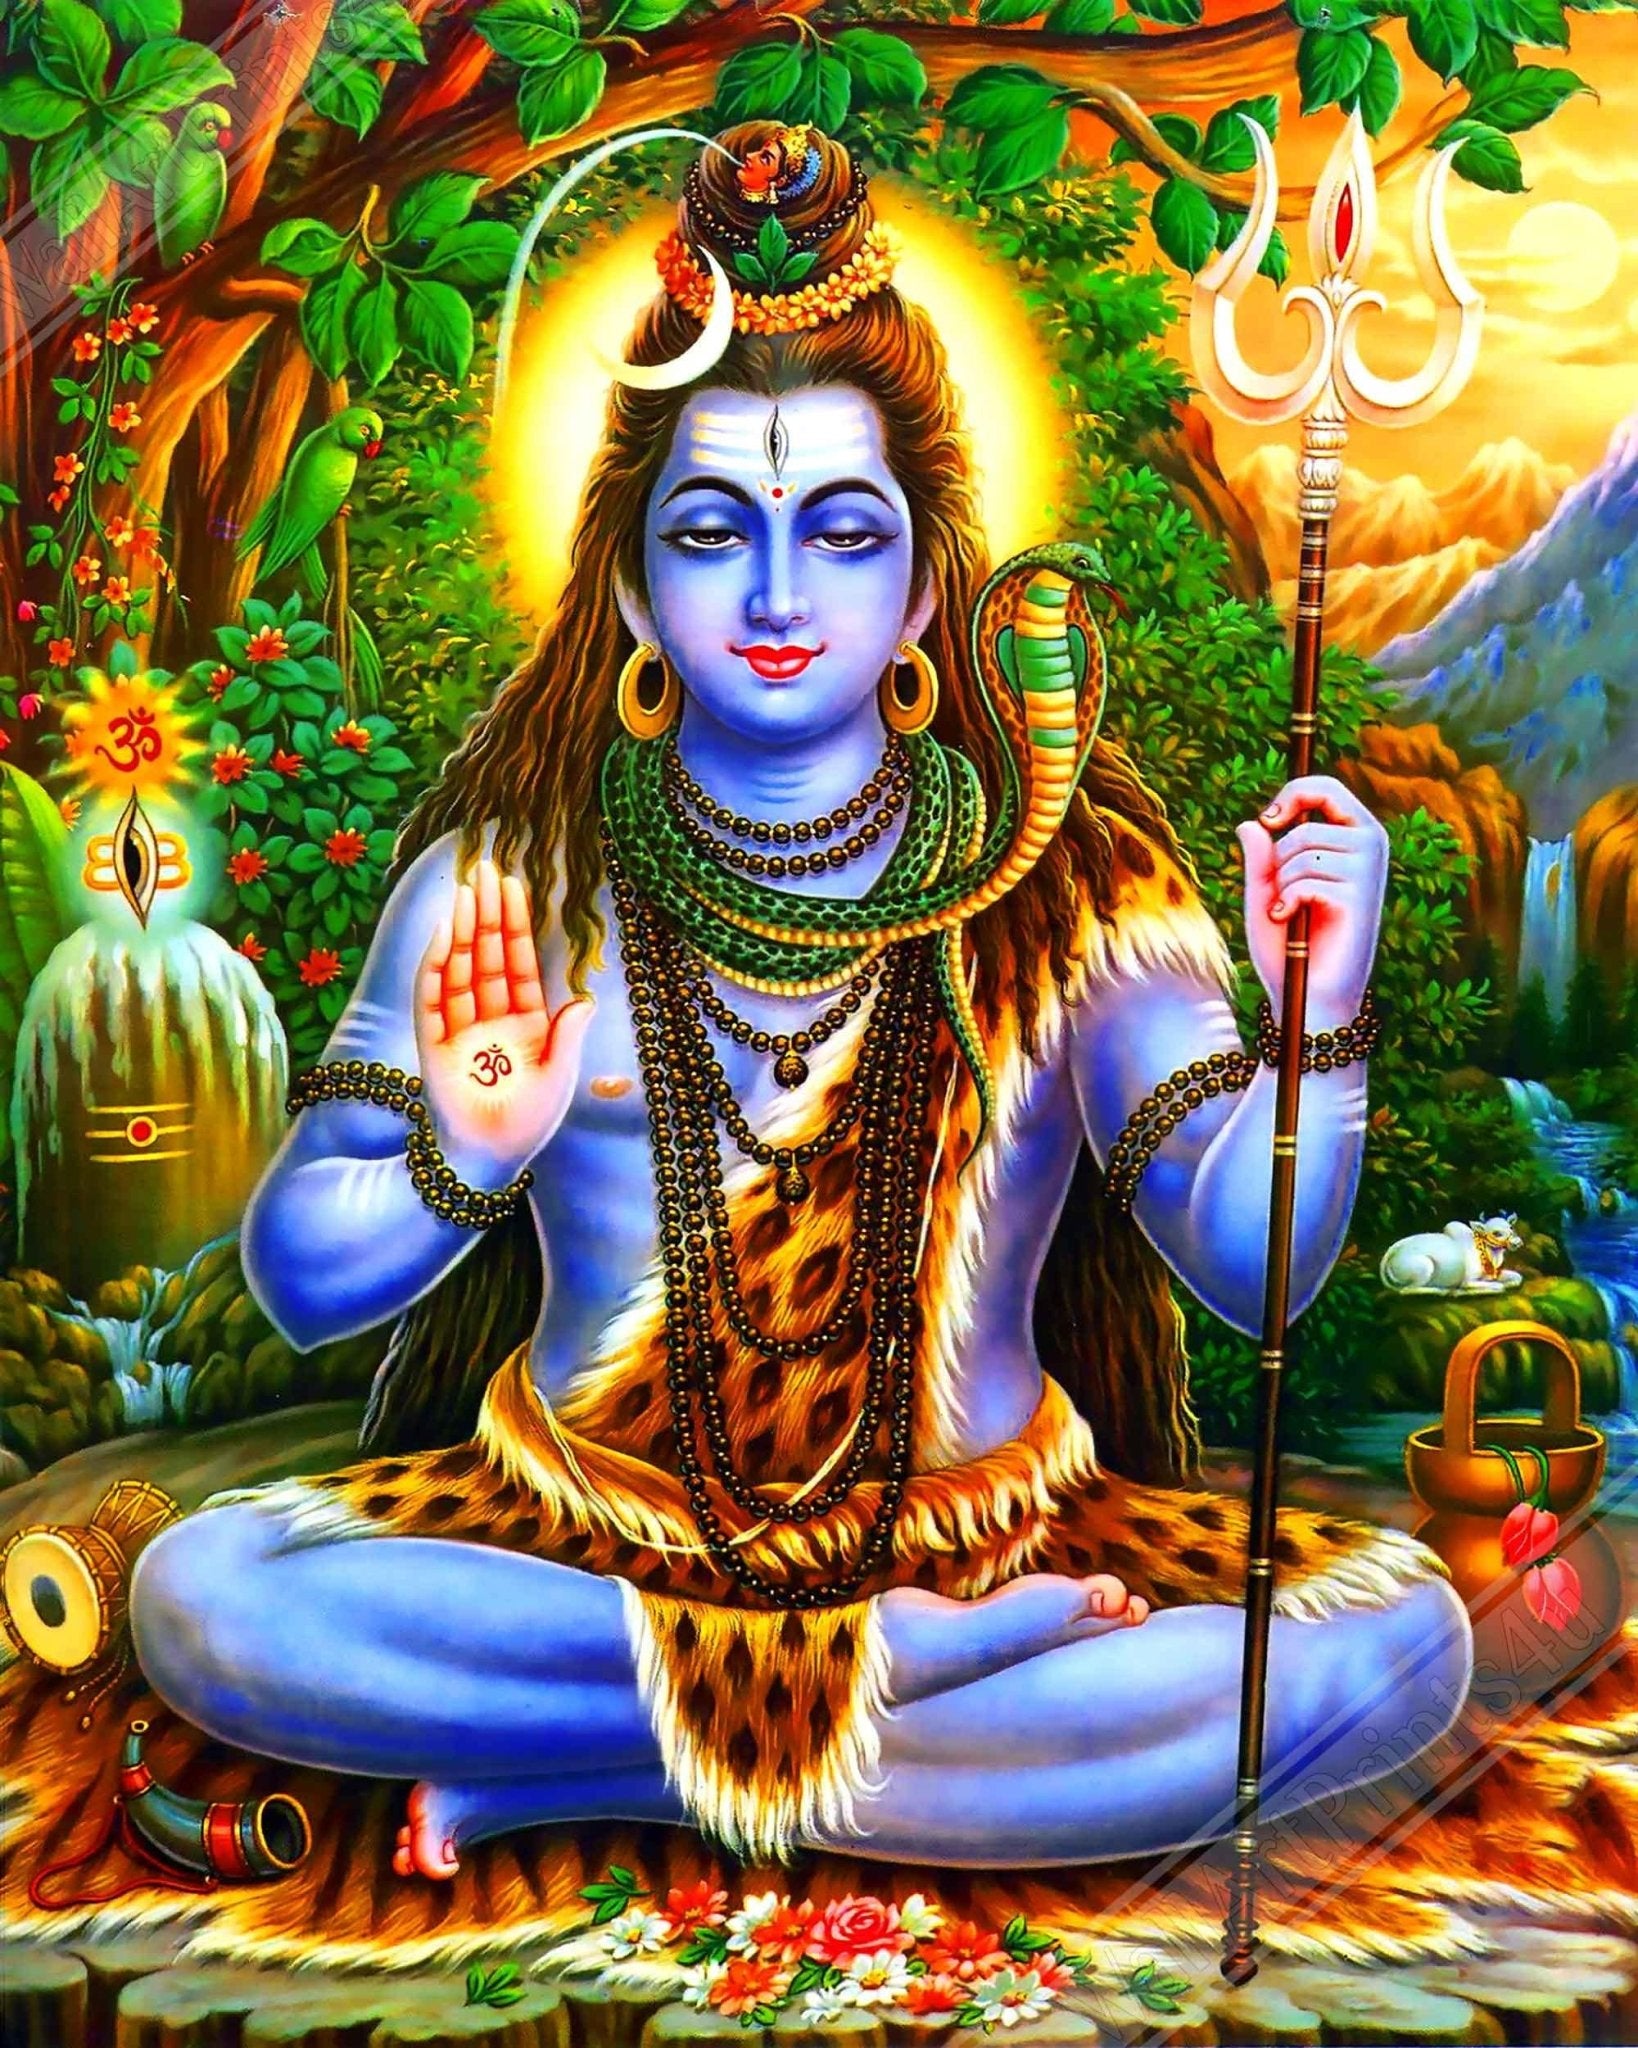 Shiva Framed Print, Hindu God Divine Energy, Dance, Destruction - Shiva Print - Supreme Being For Shiva Meditation - WallArtPrints4U